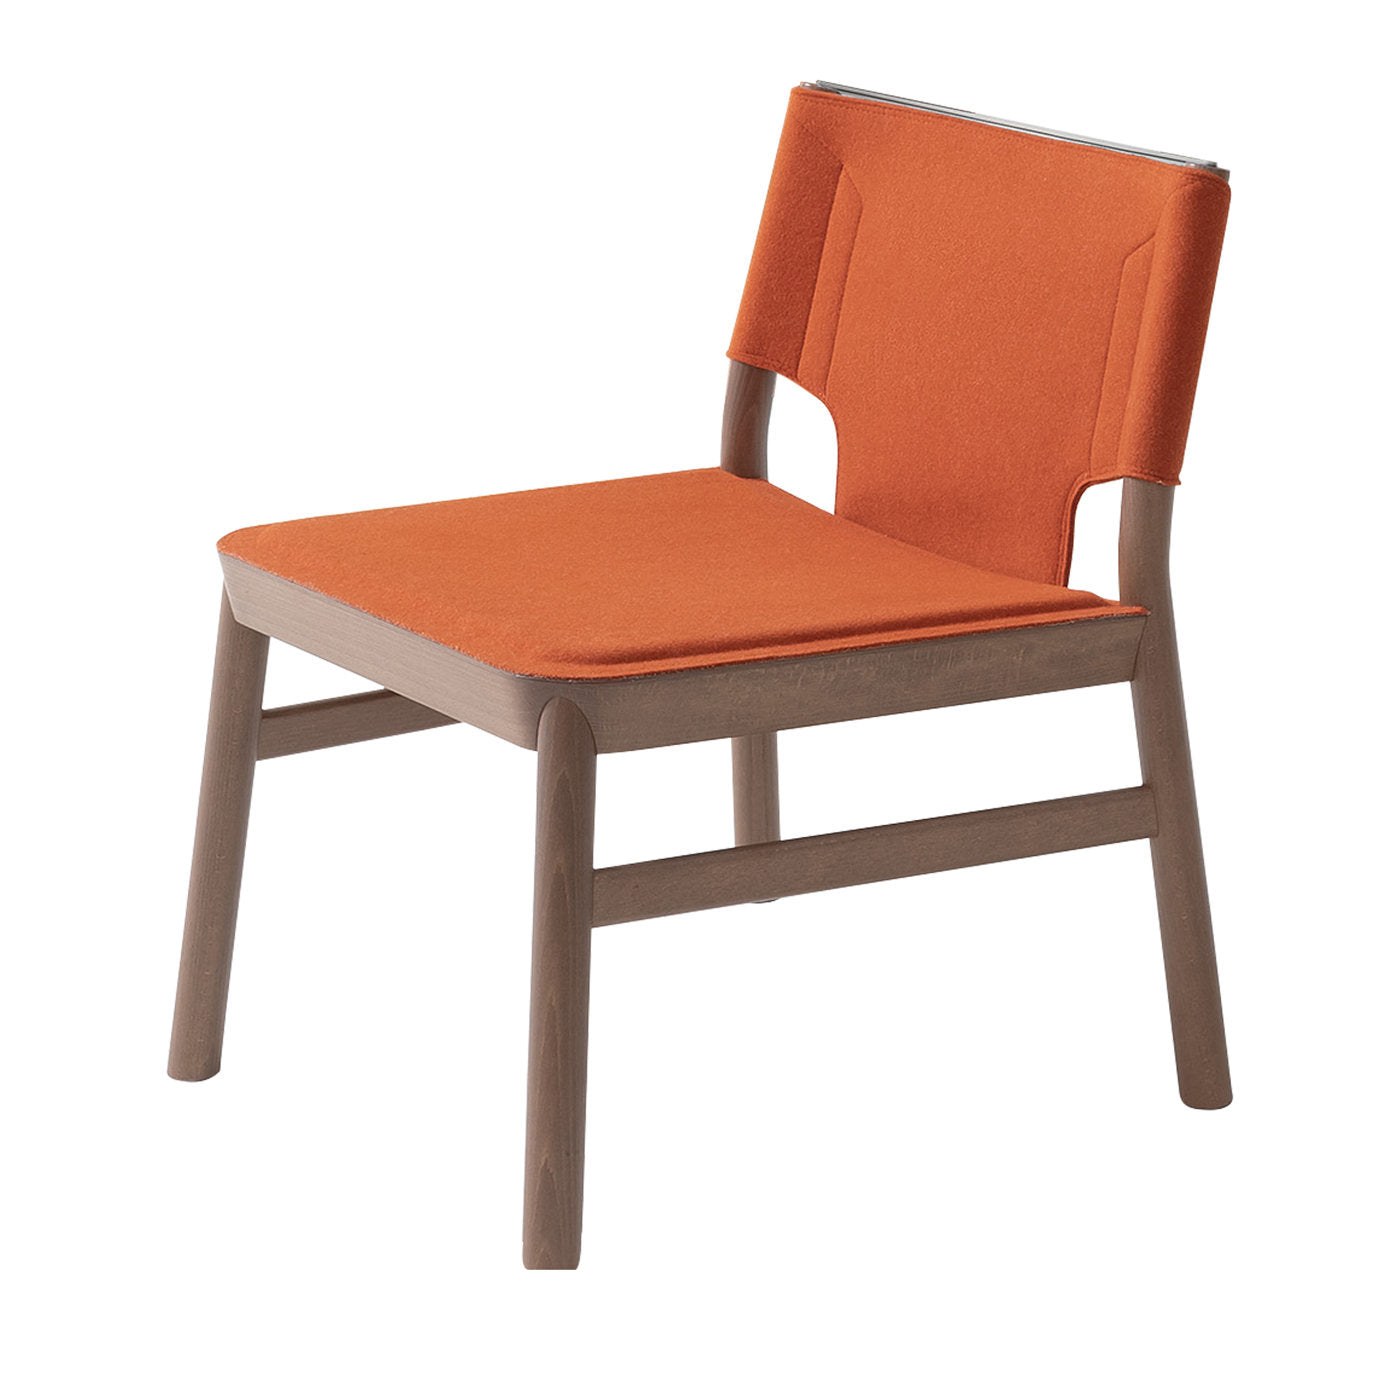 Marimba 114 Orange Lounge Chair by Emilio Nanni - Main view